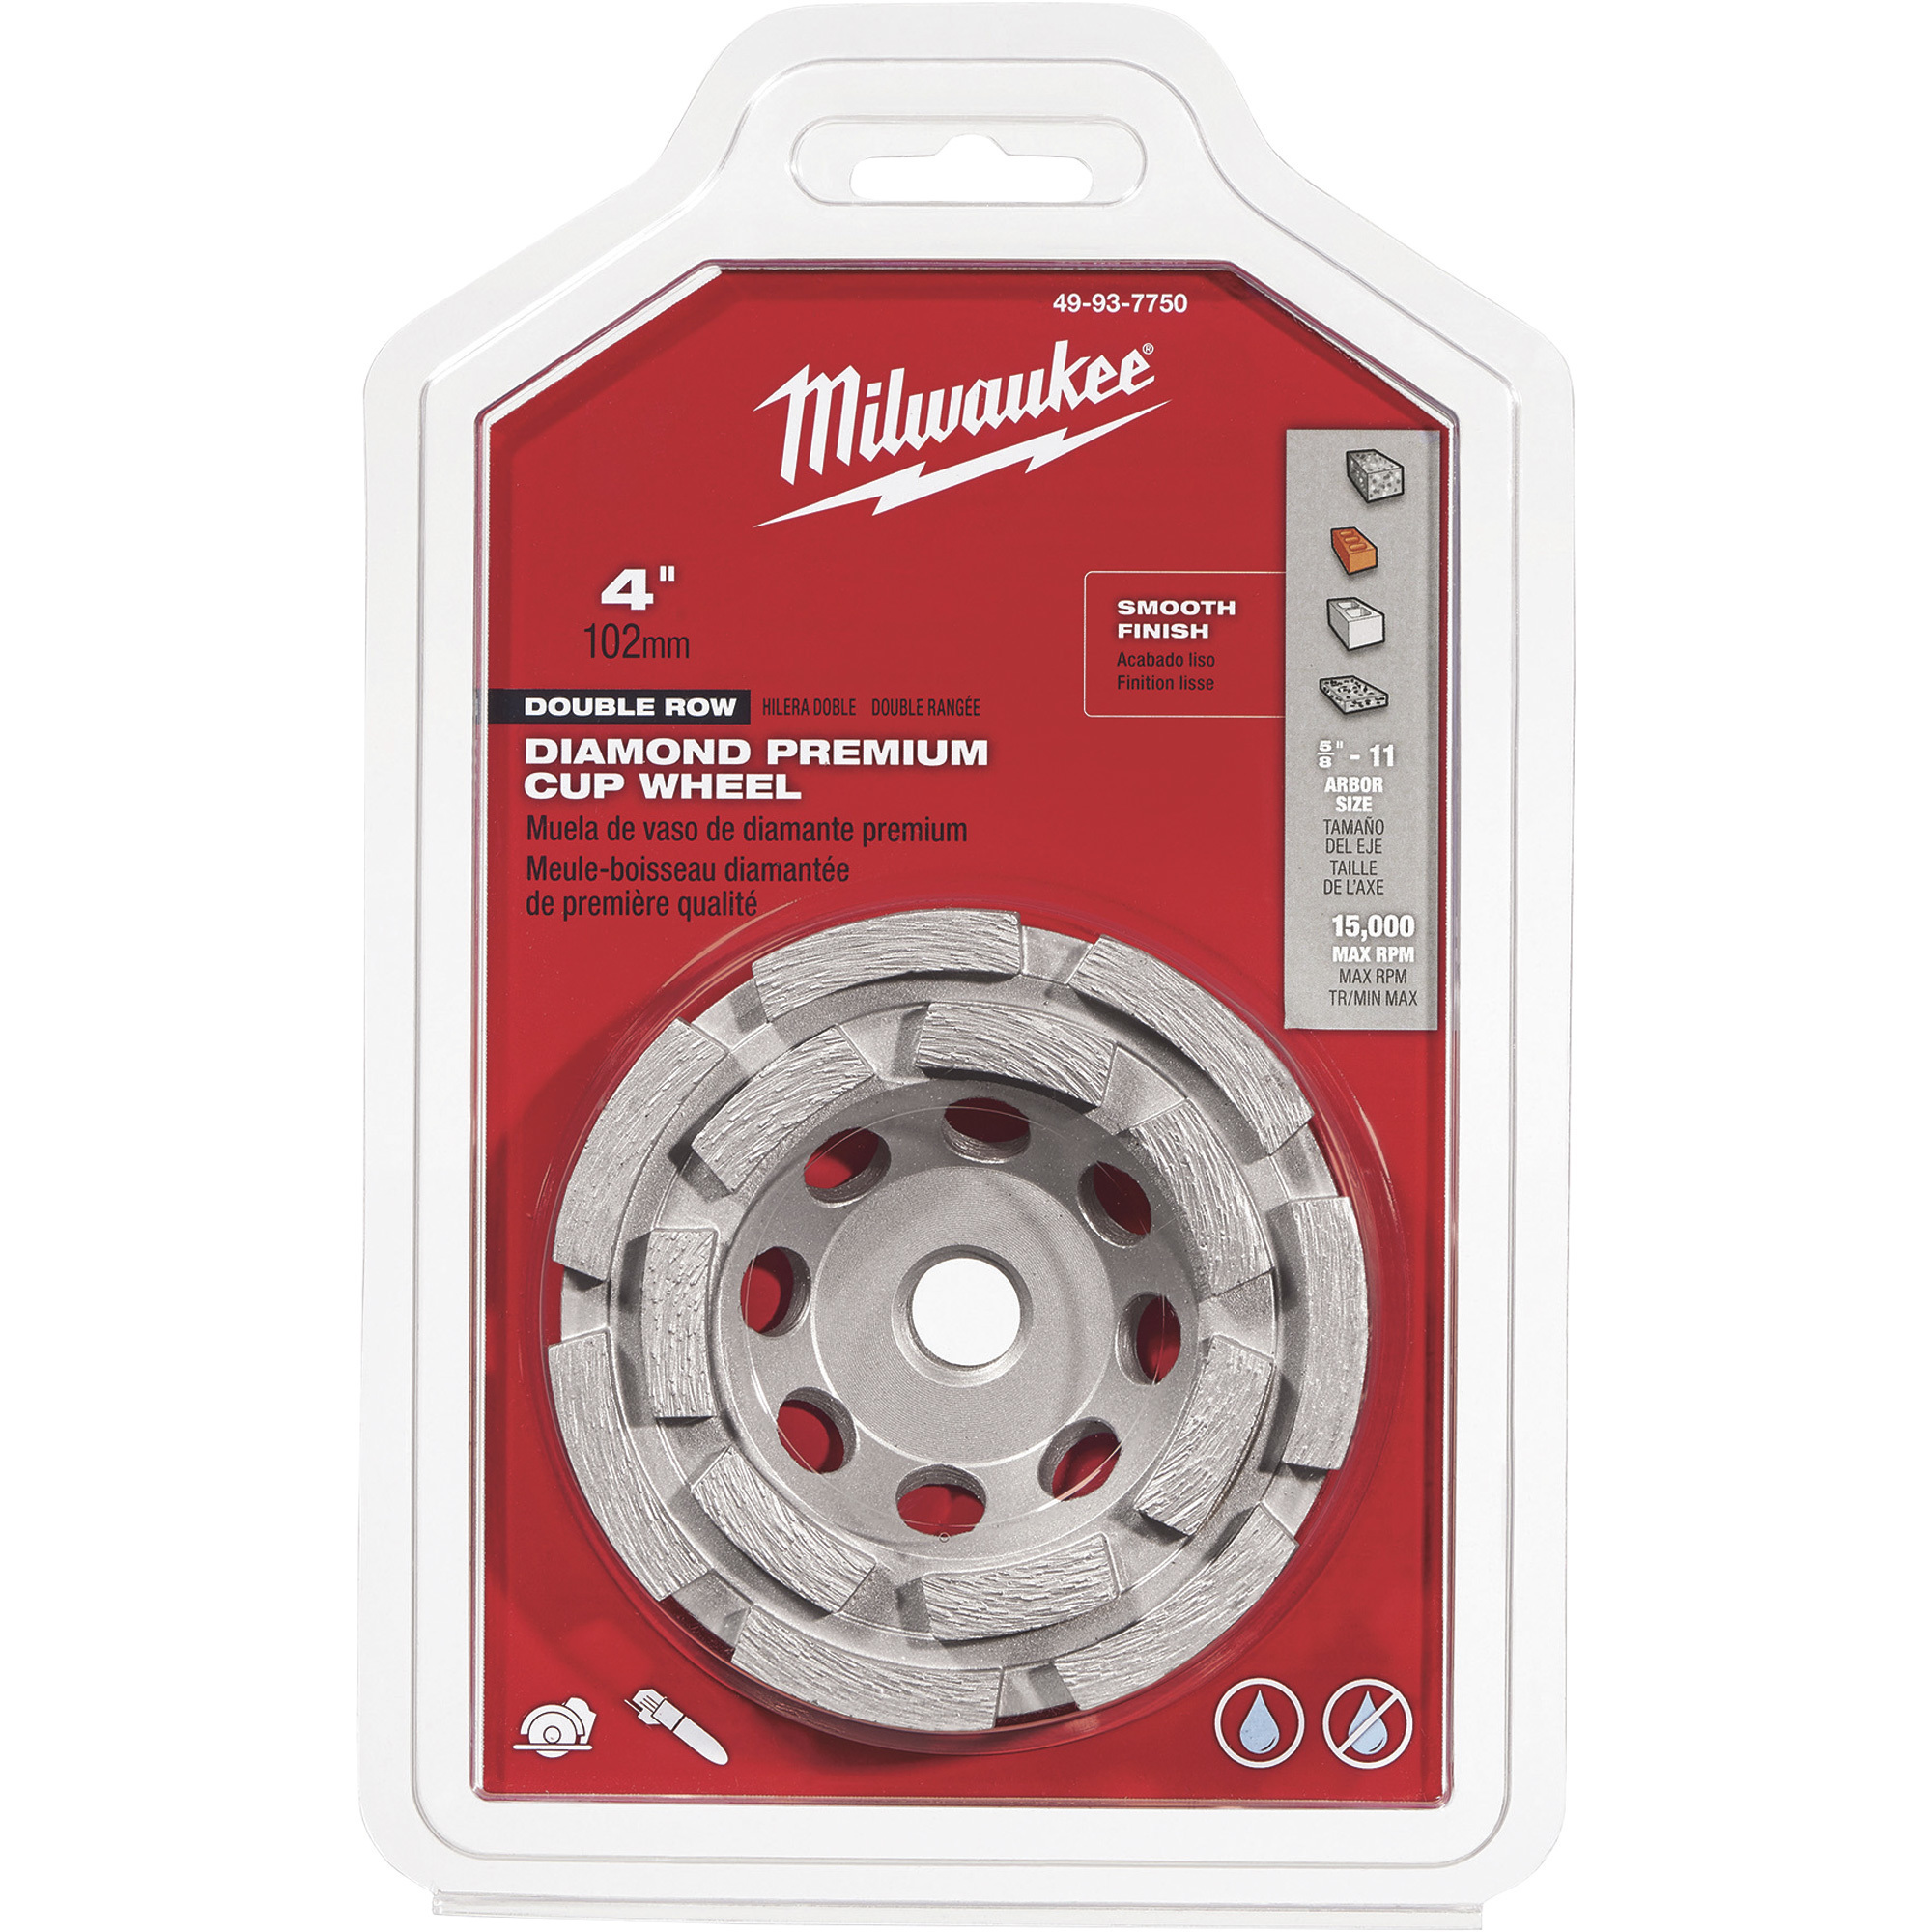 Milwaukee Diamond Cup Wheel Double Row Blade, 4Inch, Model 49-93-7750